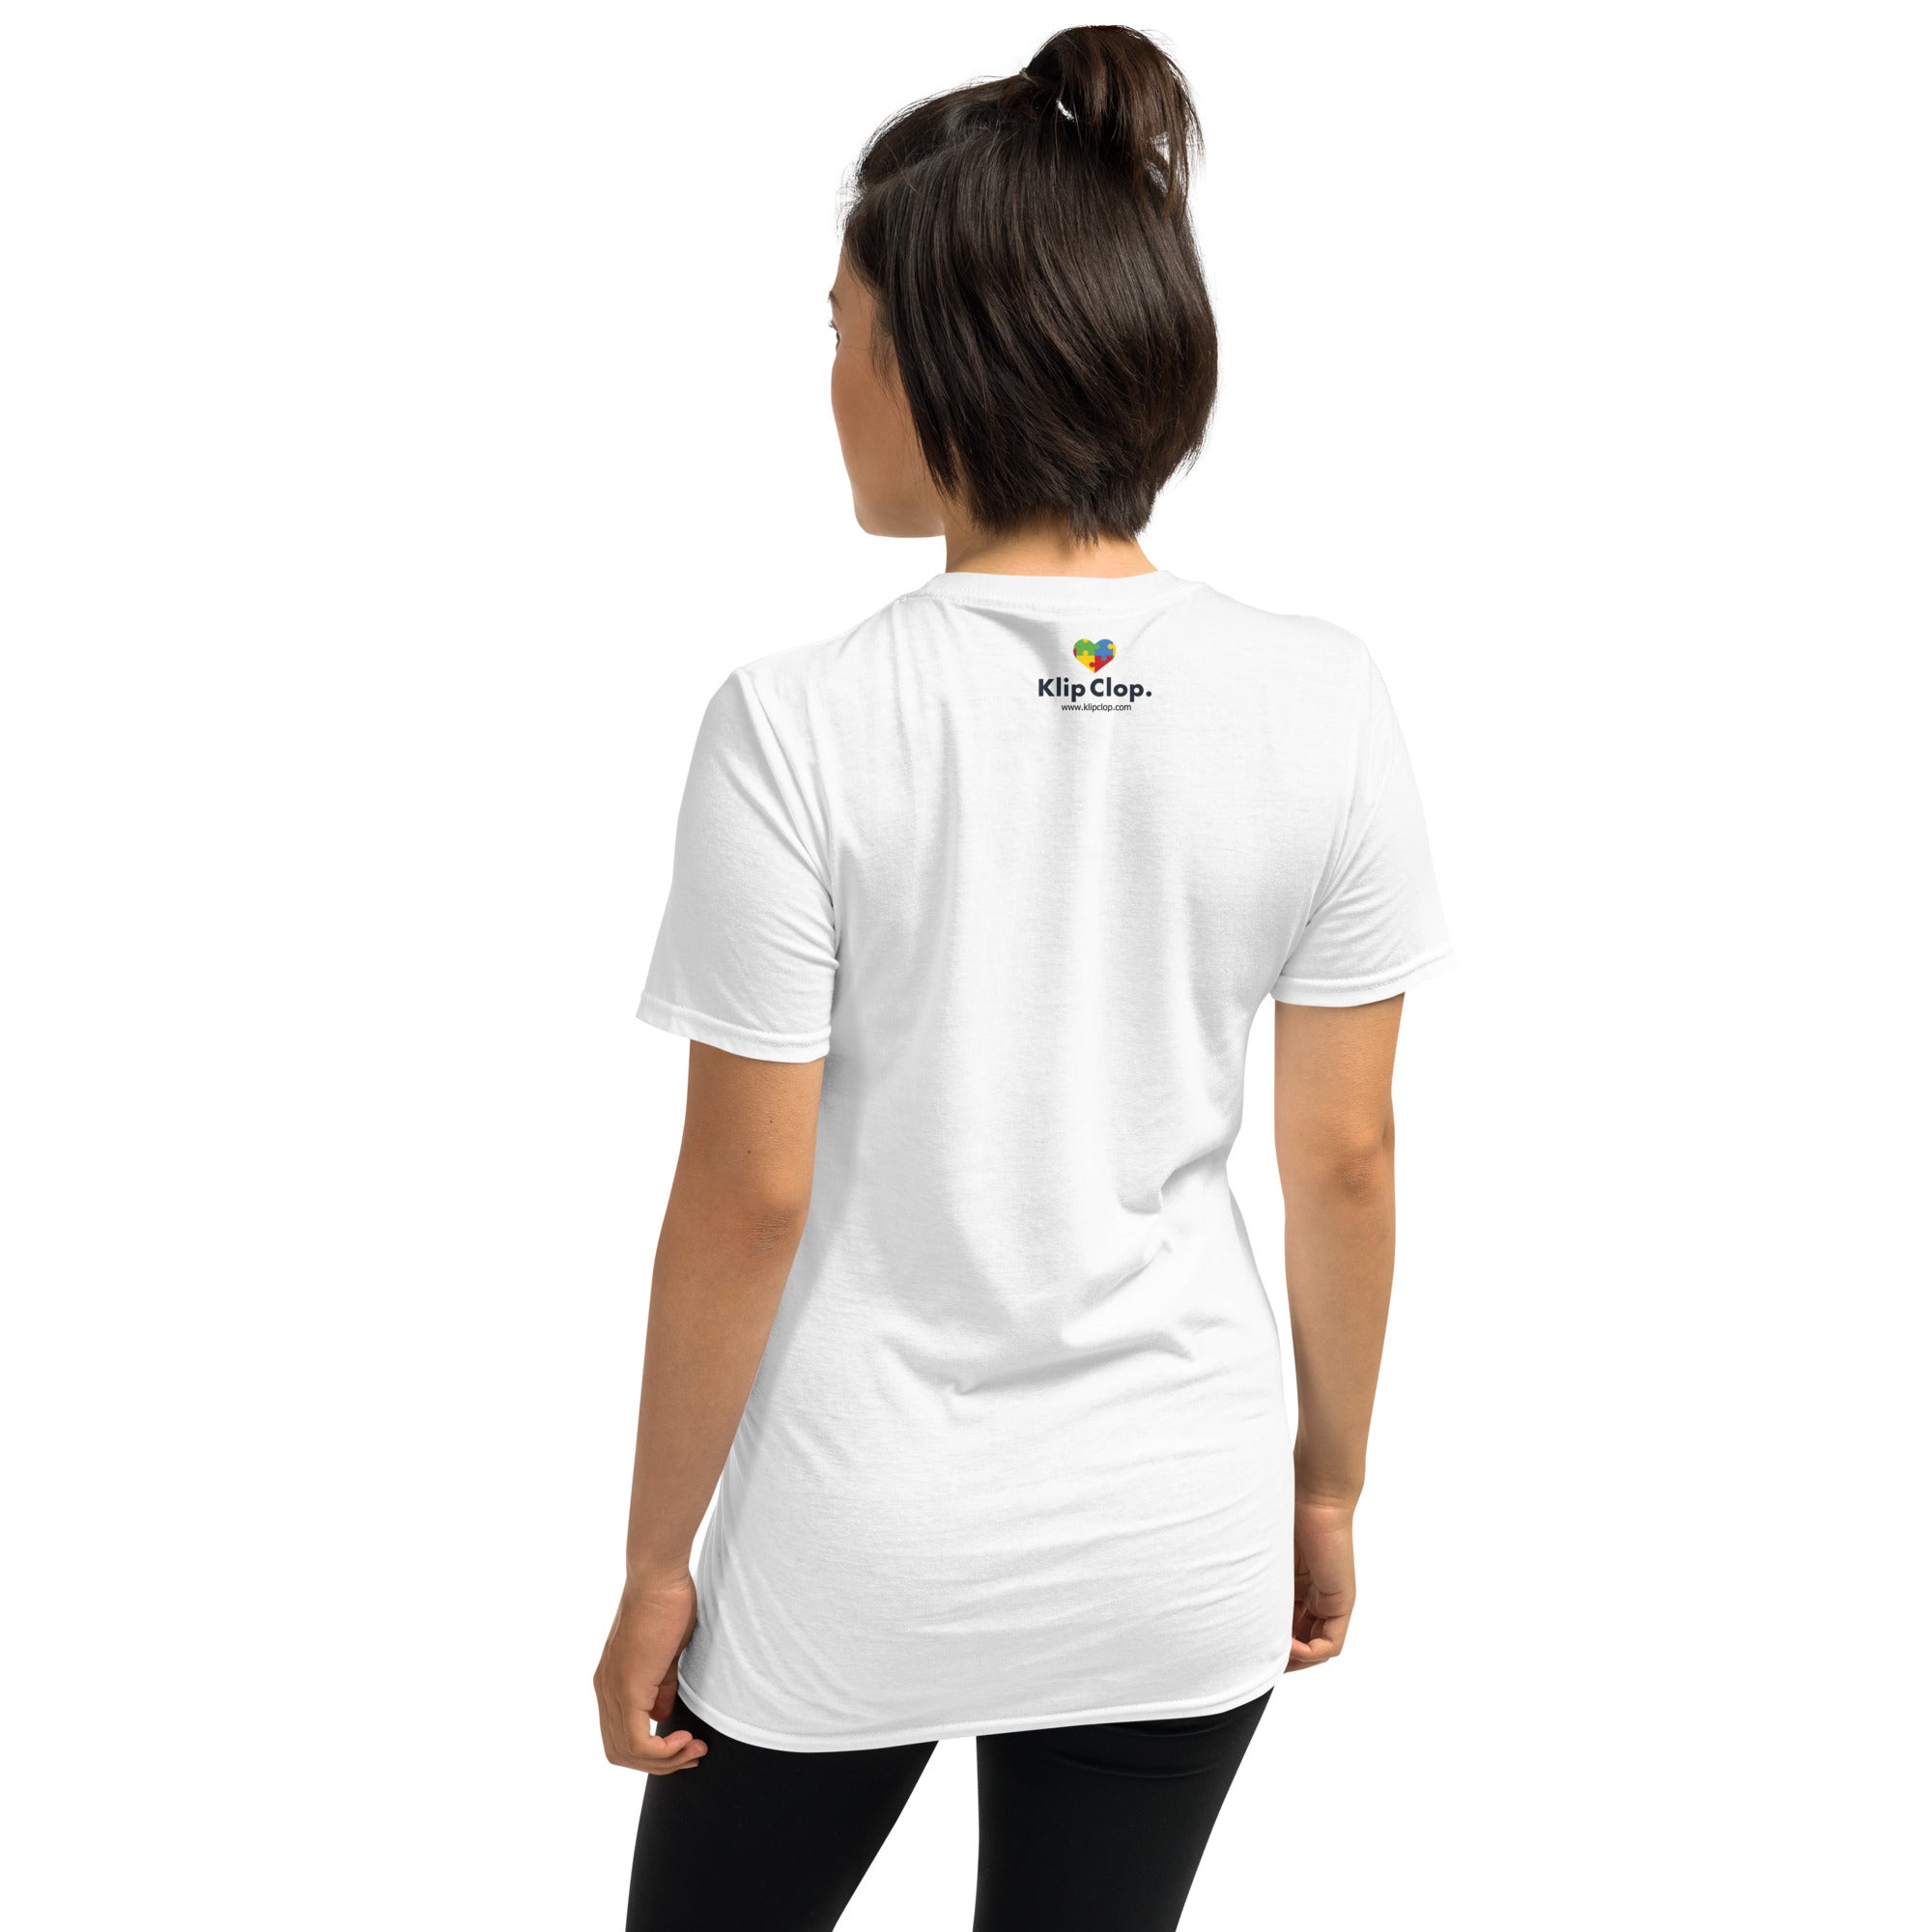 Short-Sleeve Unisex T-Shirt- Look Beyond Autism